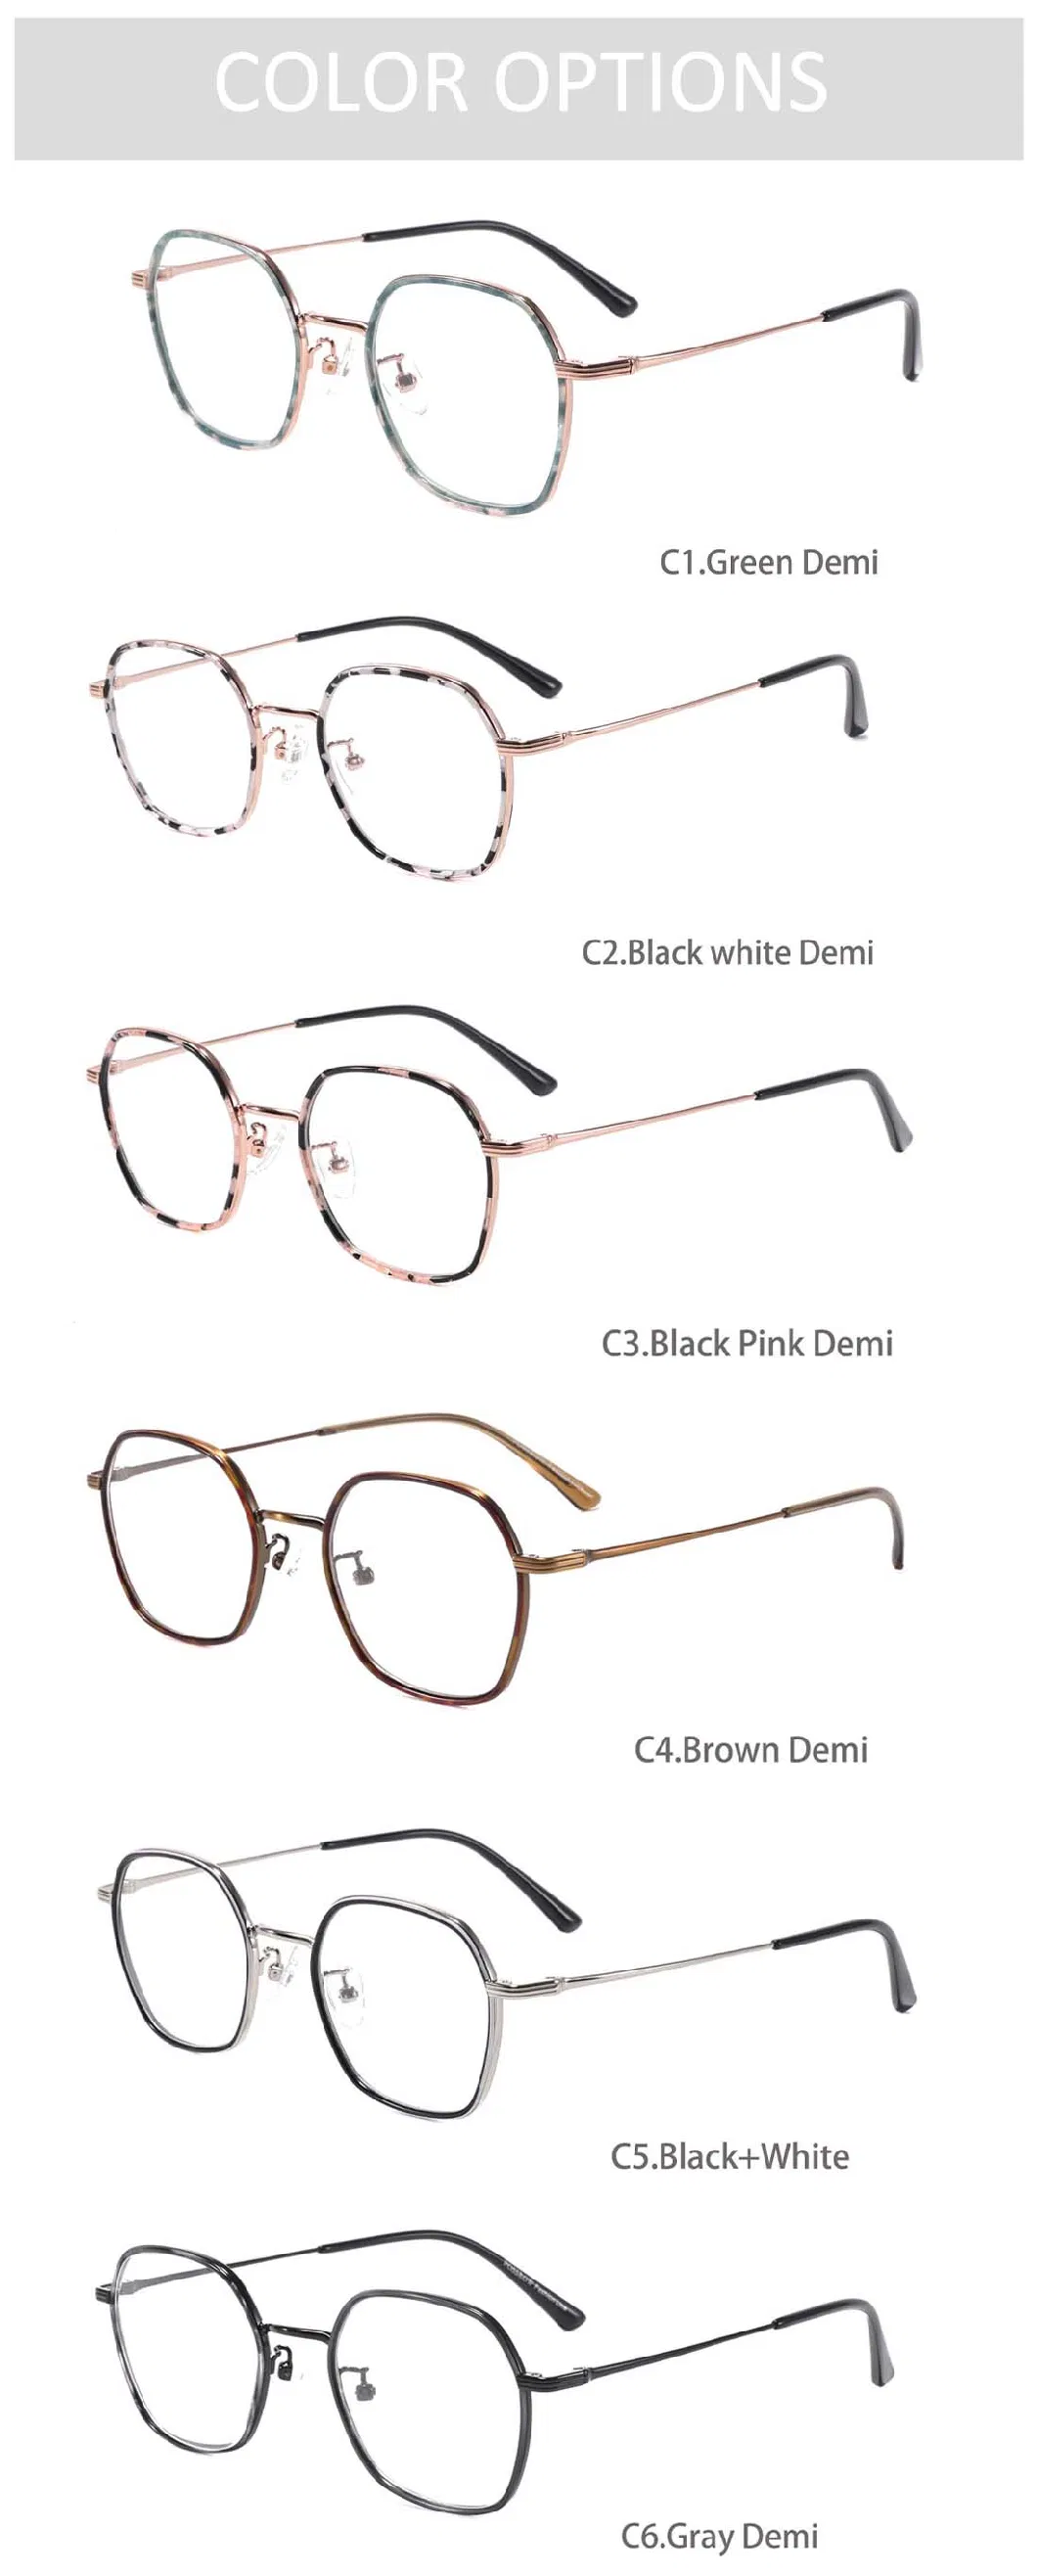 Gd Luxury Acetate Metal Eyewear Retro Men Rectangle Eyeglasses Frames Glasses Optical Frames